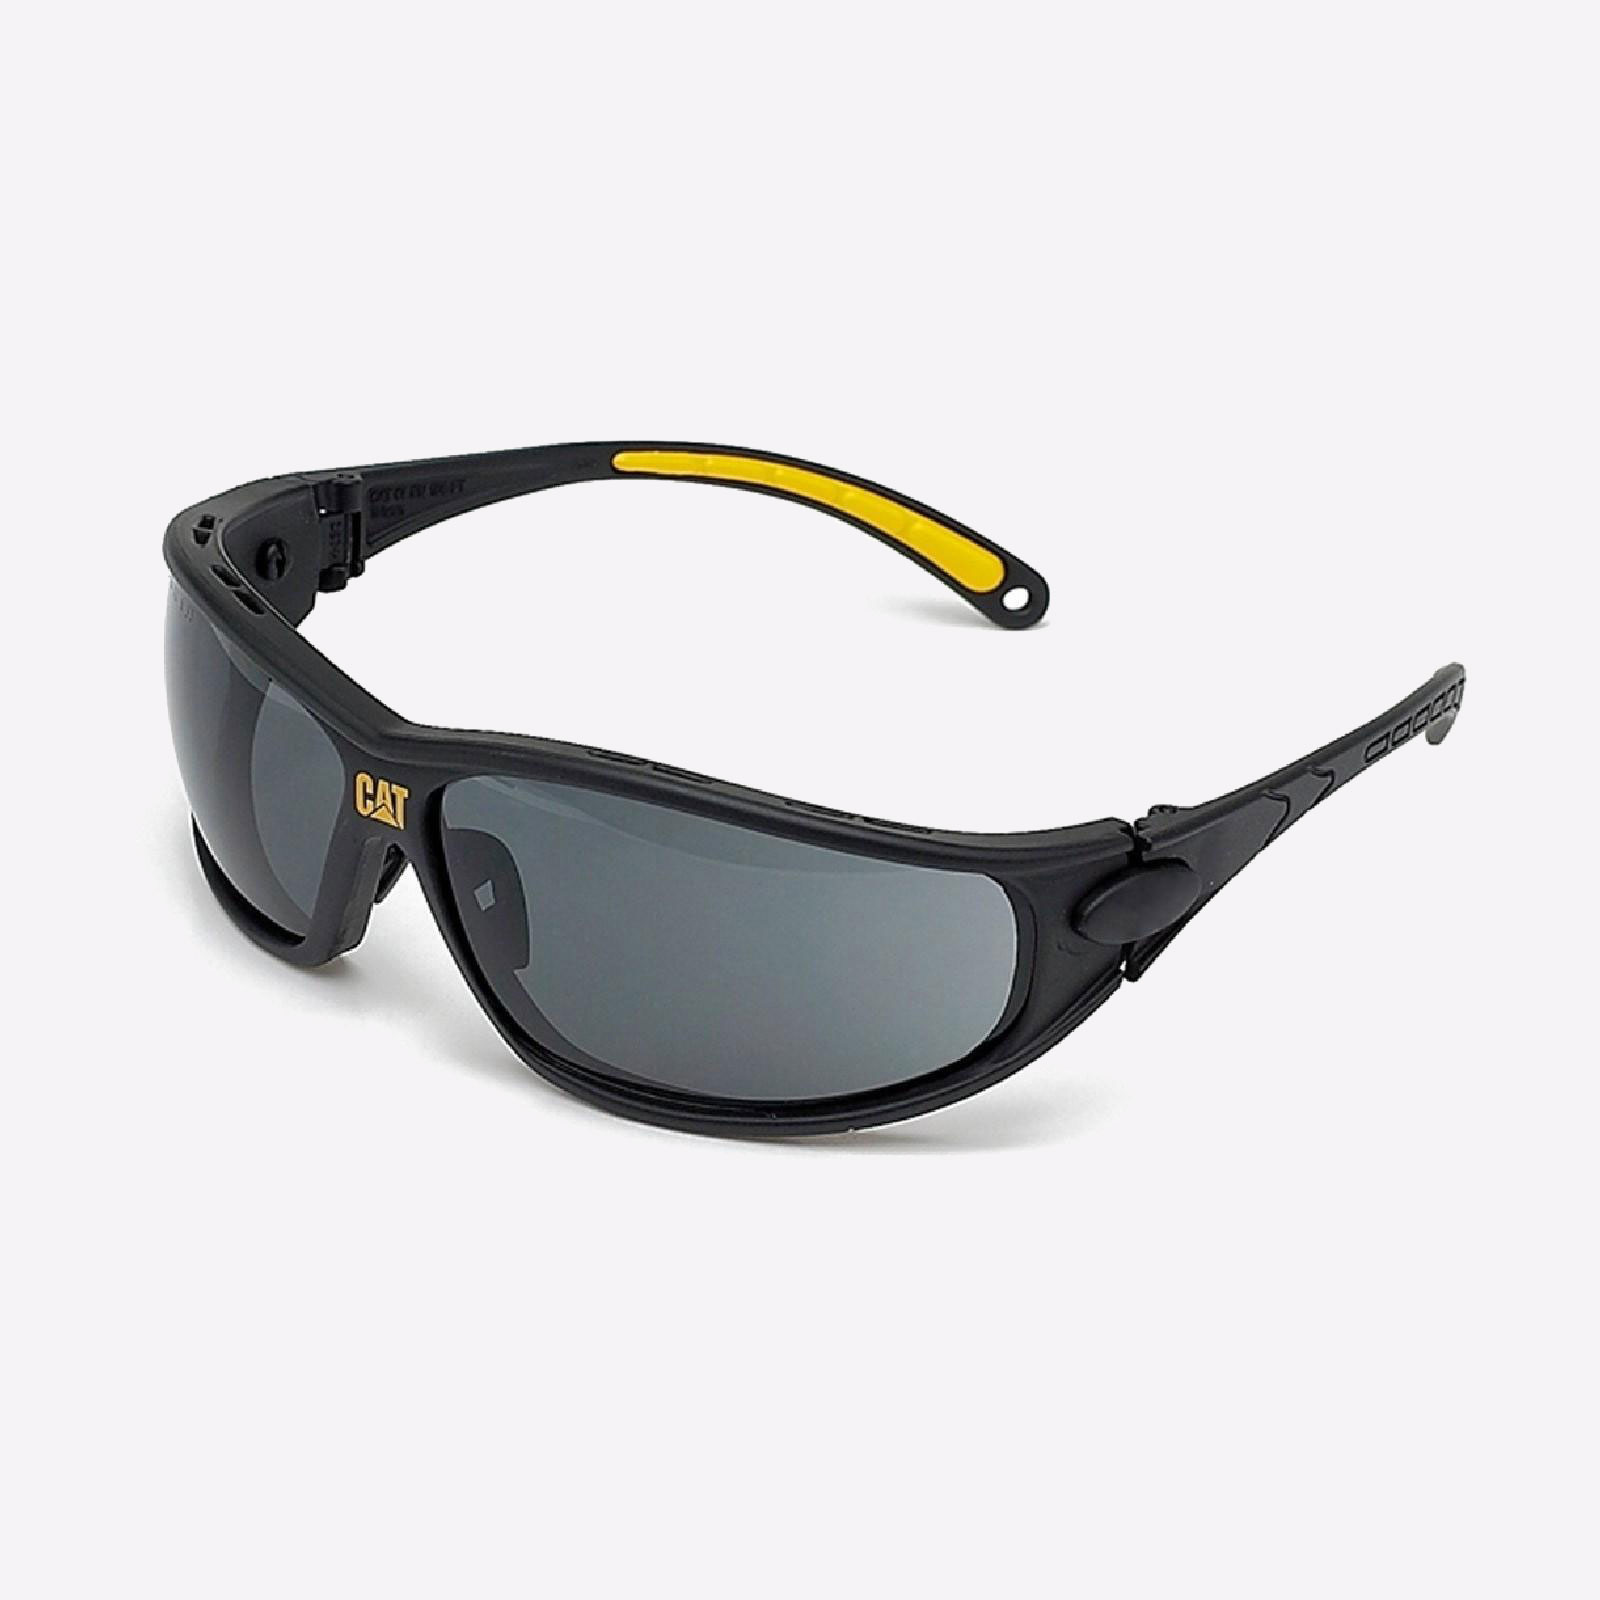 Caterpillar Tread Protective Eyewear - GRD-14216-18121-01